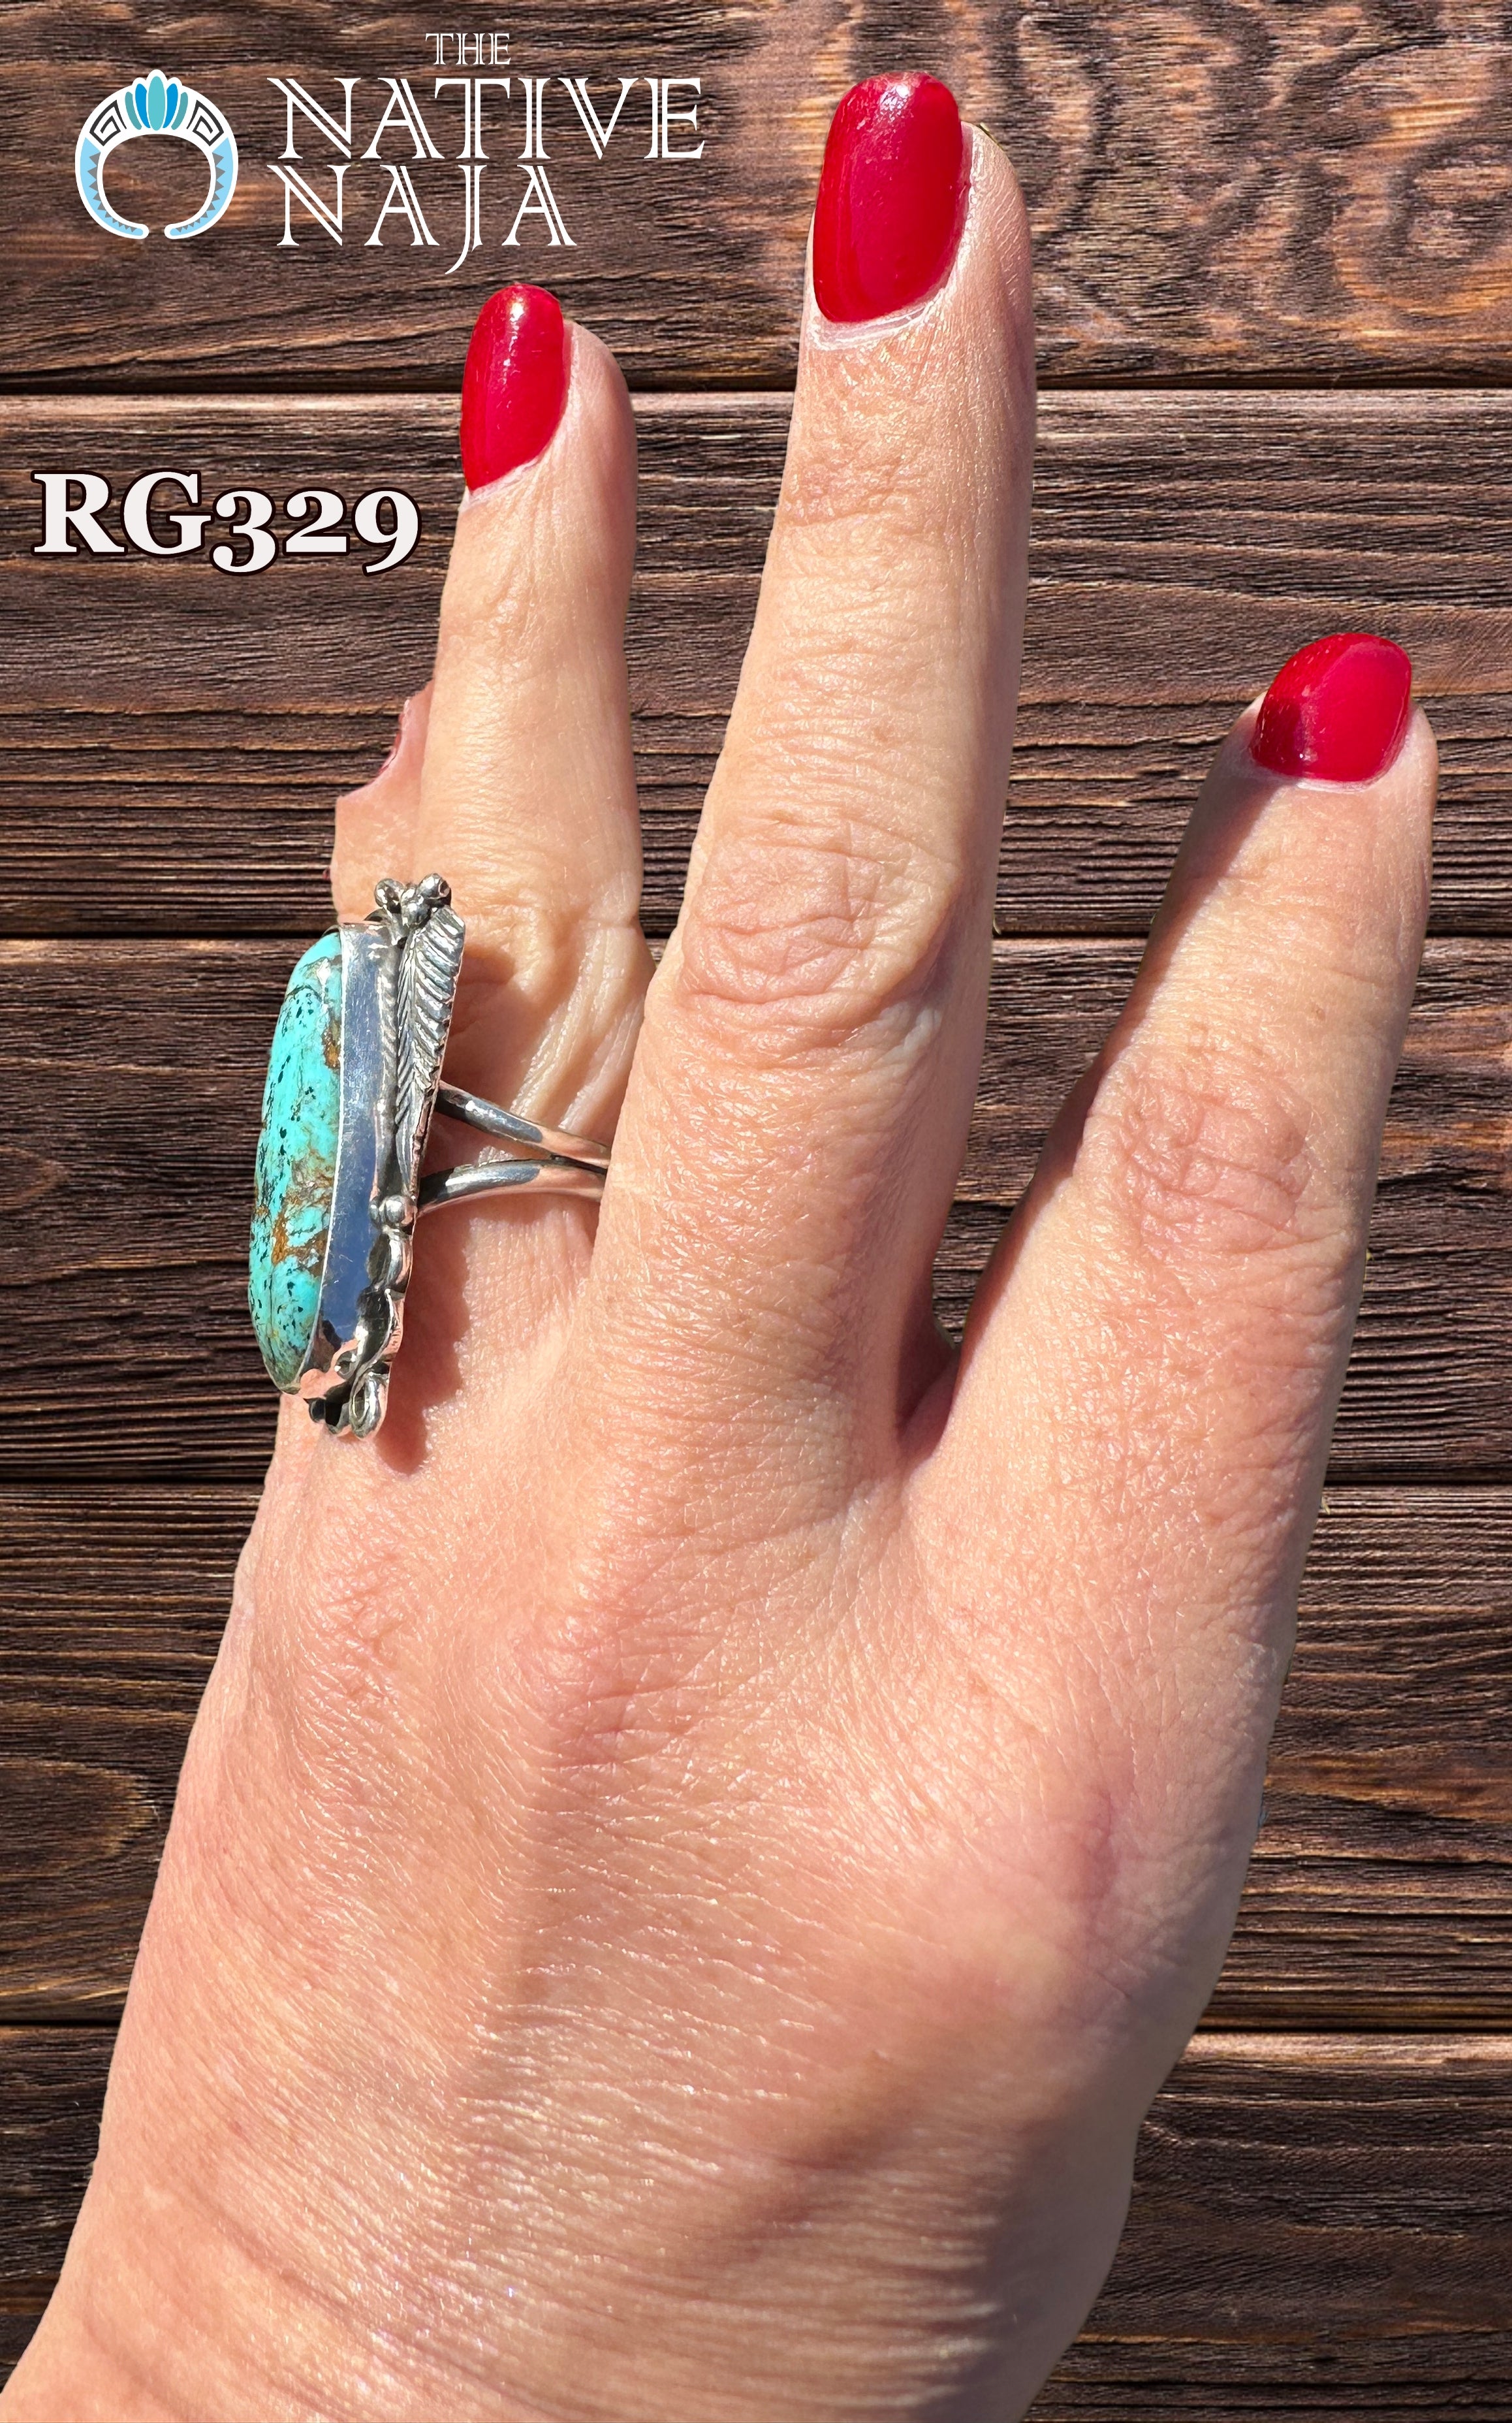 Navajo Artist Juan Guerro Sterling Silver & Kingman Turquoise Ring Size 7 1/2 RG329